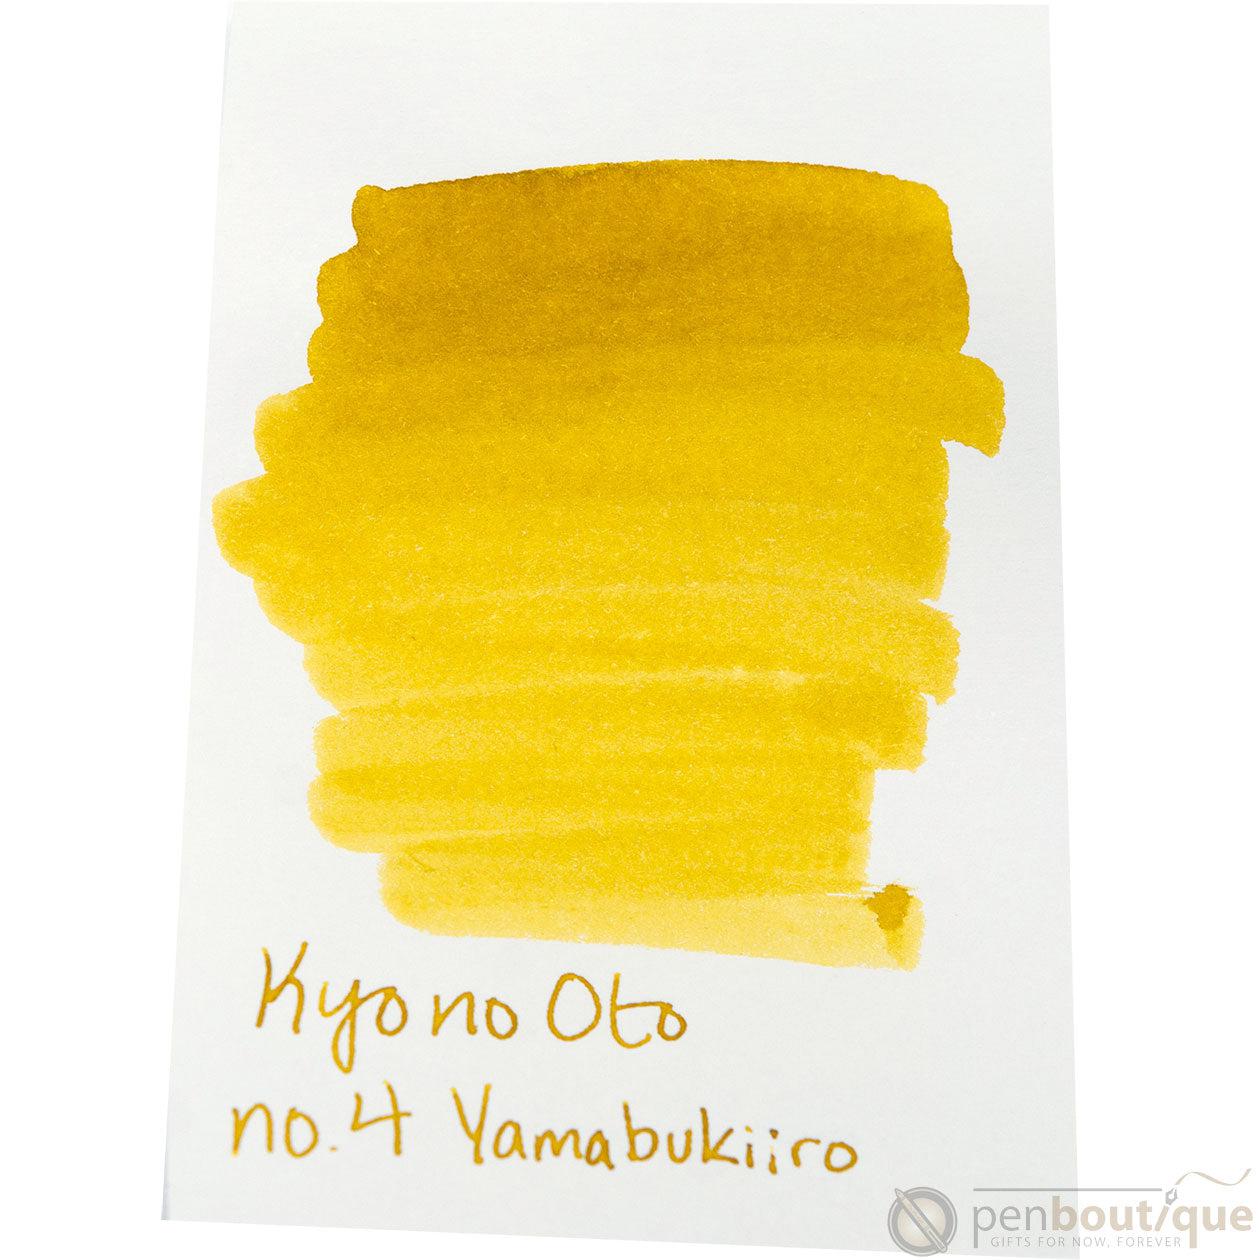 Kyoto Ink Bottle - Kyo no Oto - Yamabukiiro-Pen Boutique Ltd